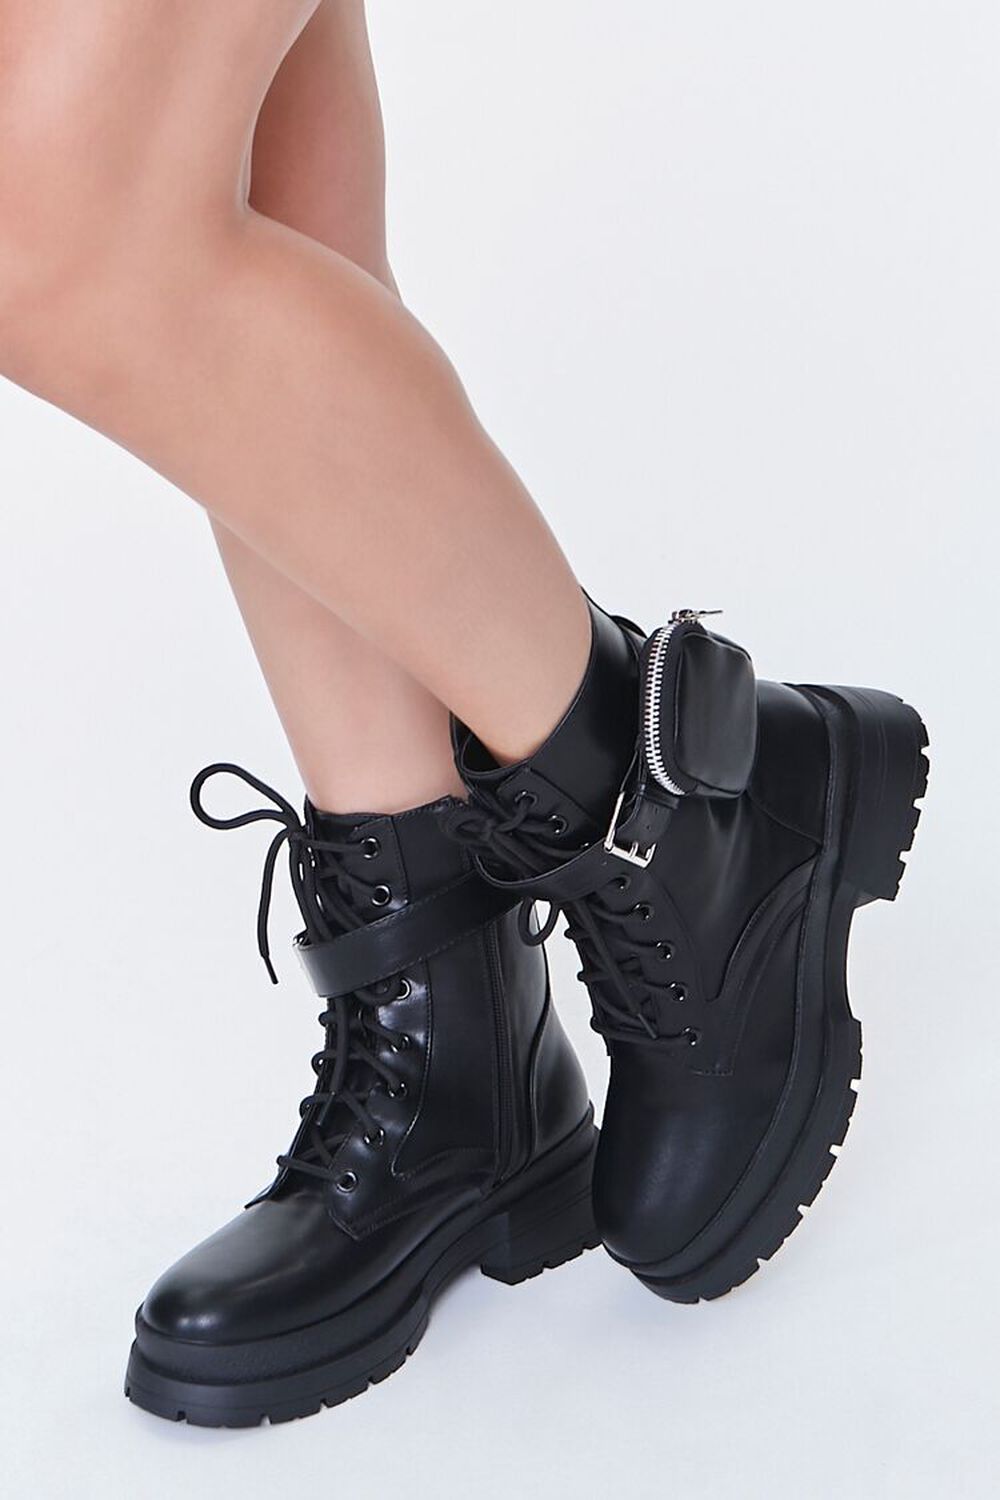 BLACK Coin Purse Lace-Up Combat Boots, image 1